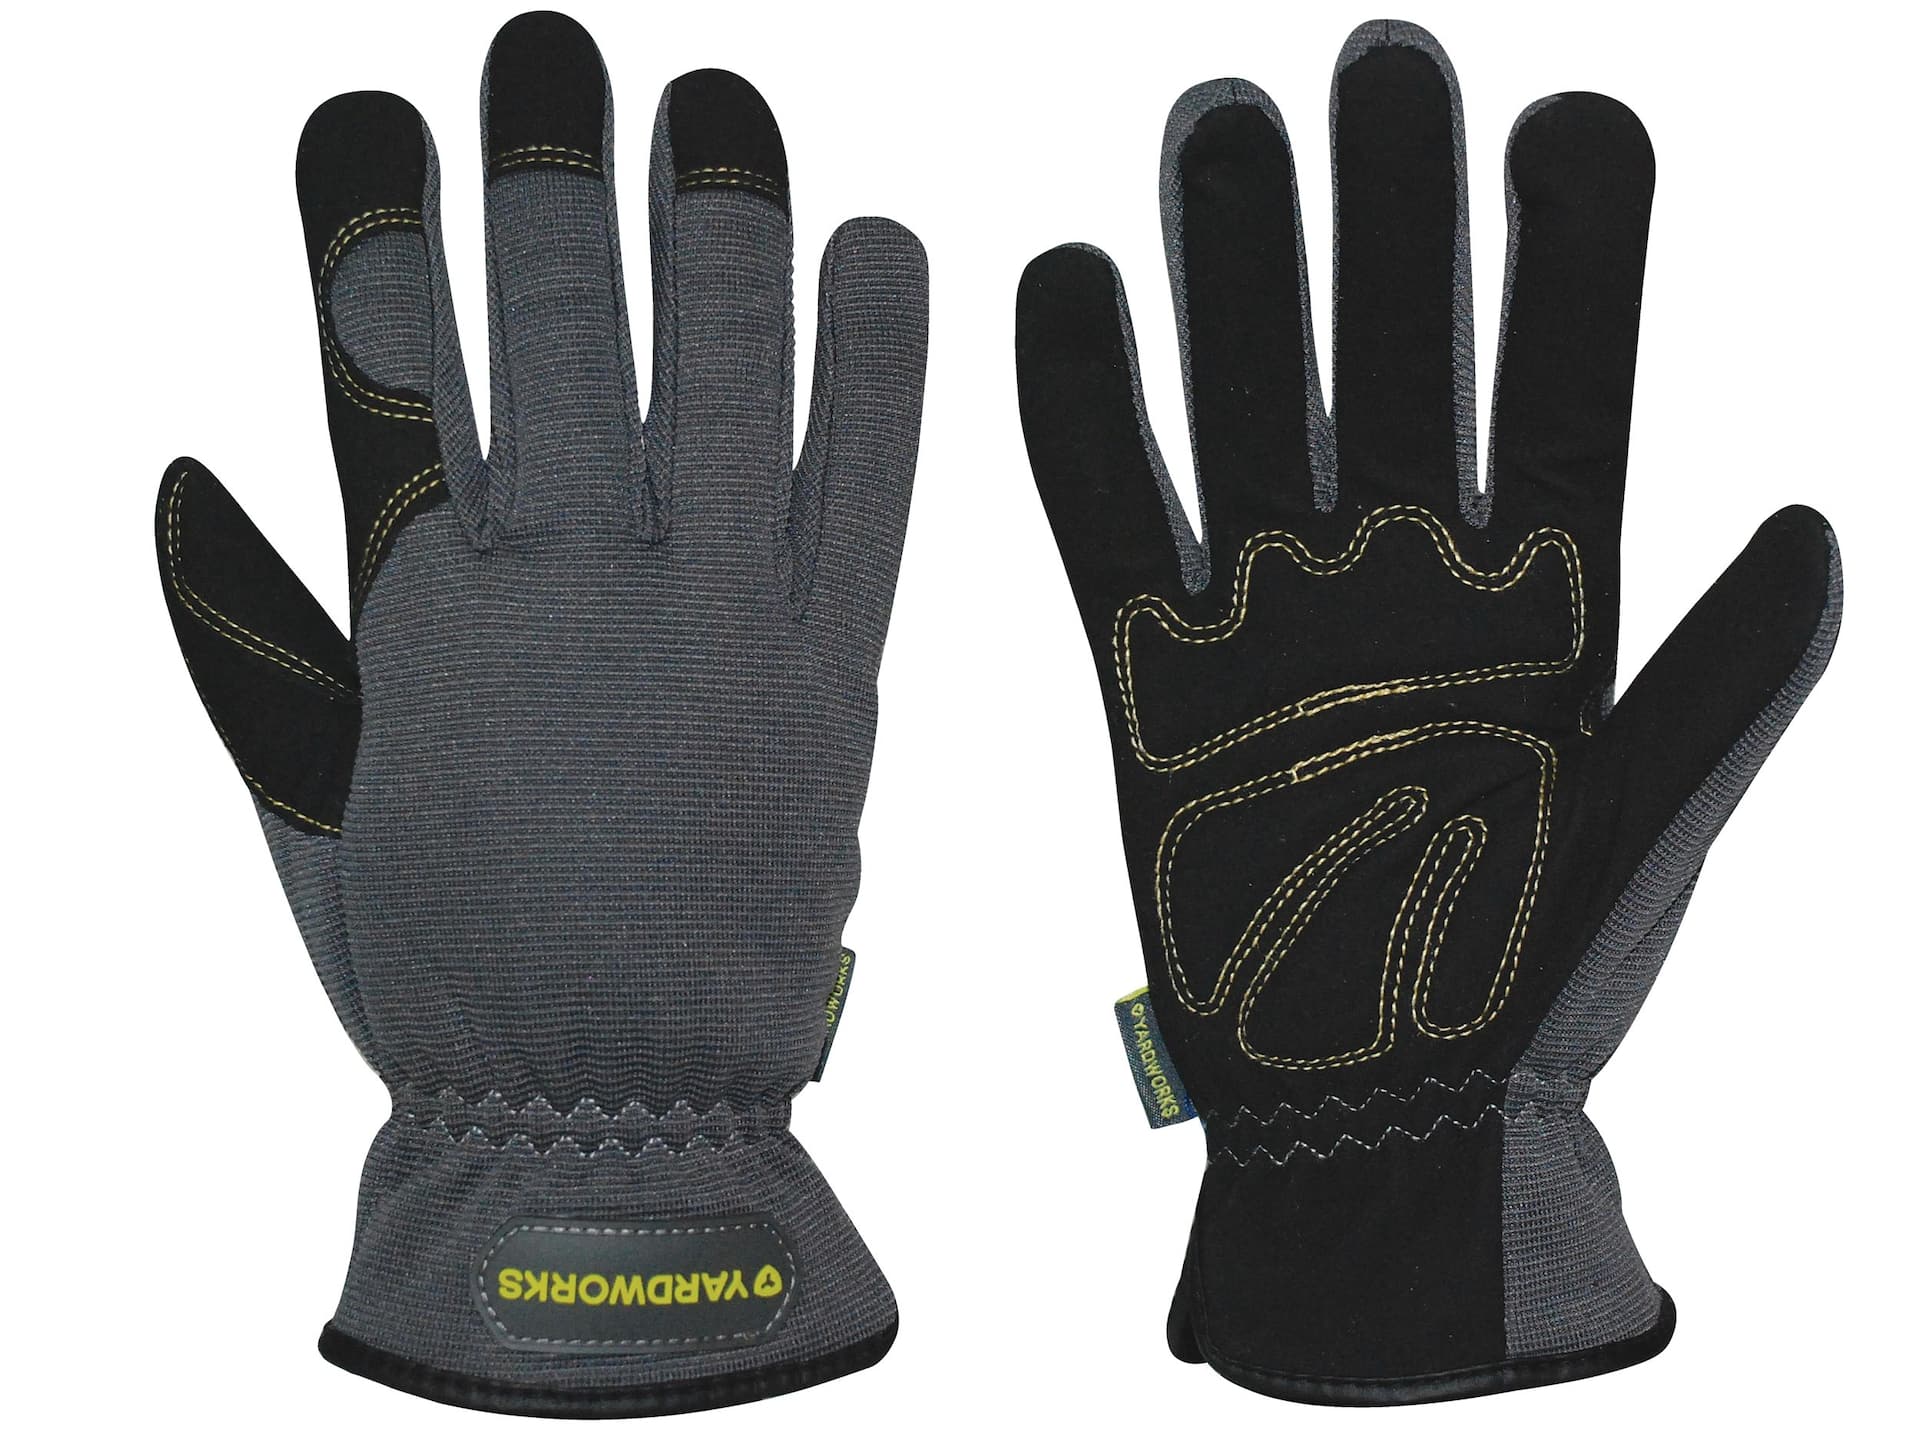 Yardworks Synthetic Leather Unisex Gardening Gloves, Assorted Sizes, Blue